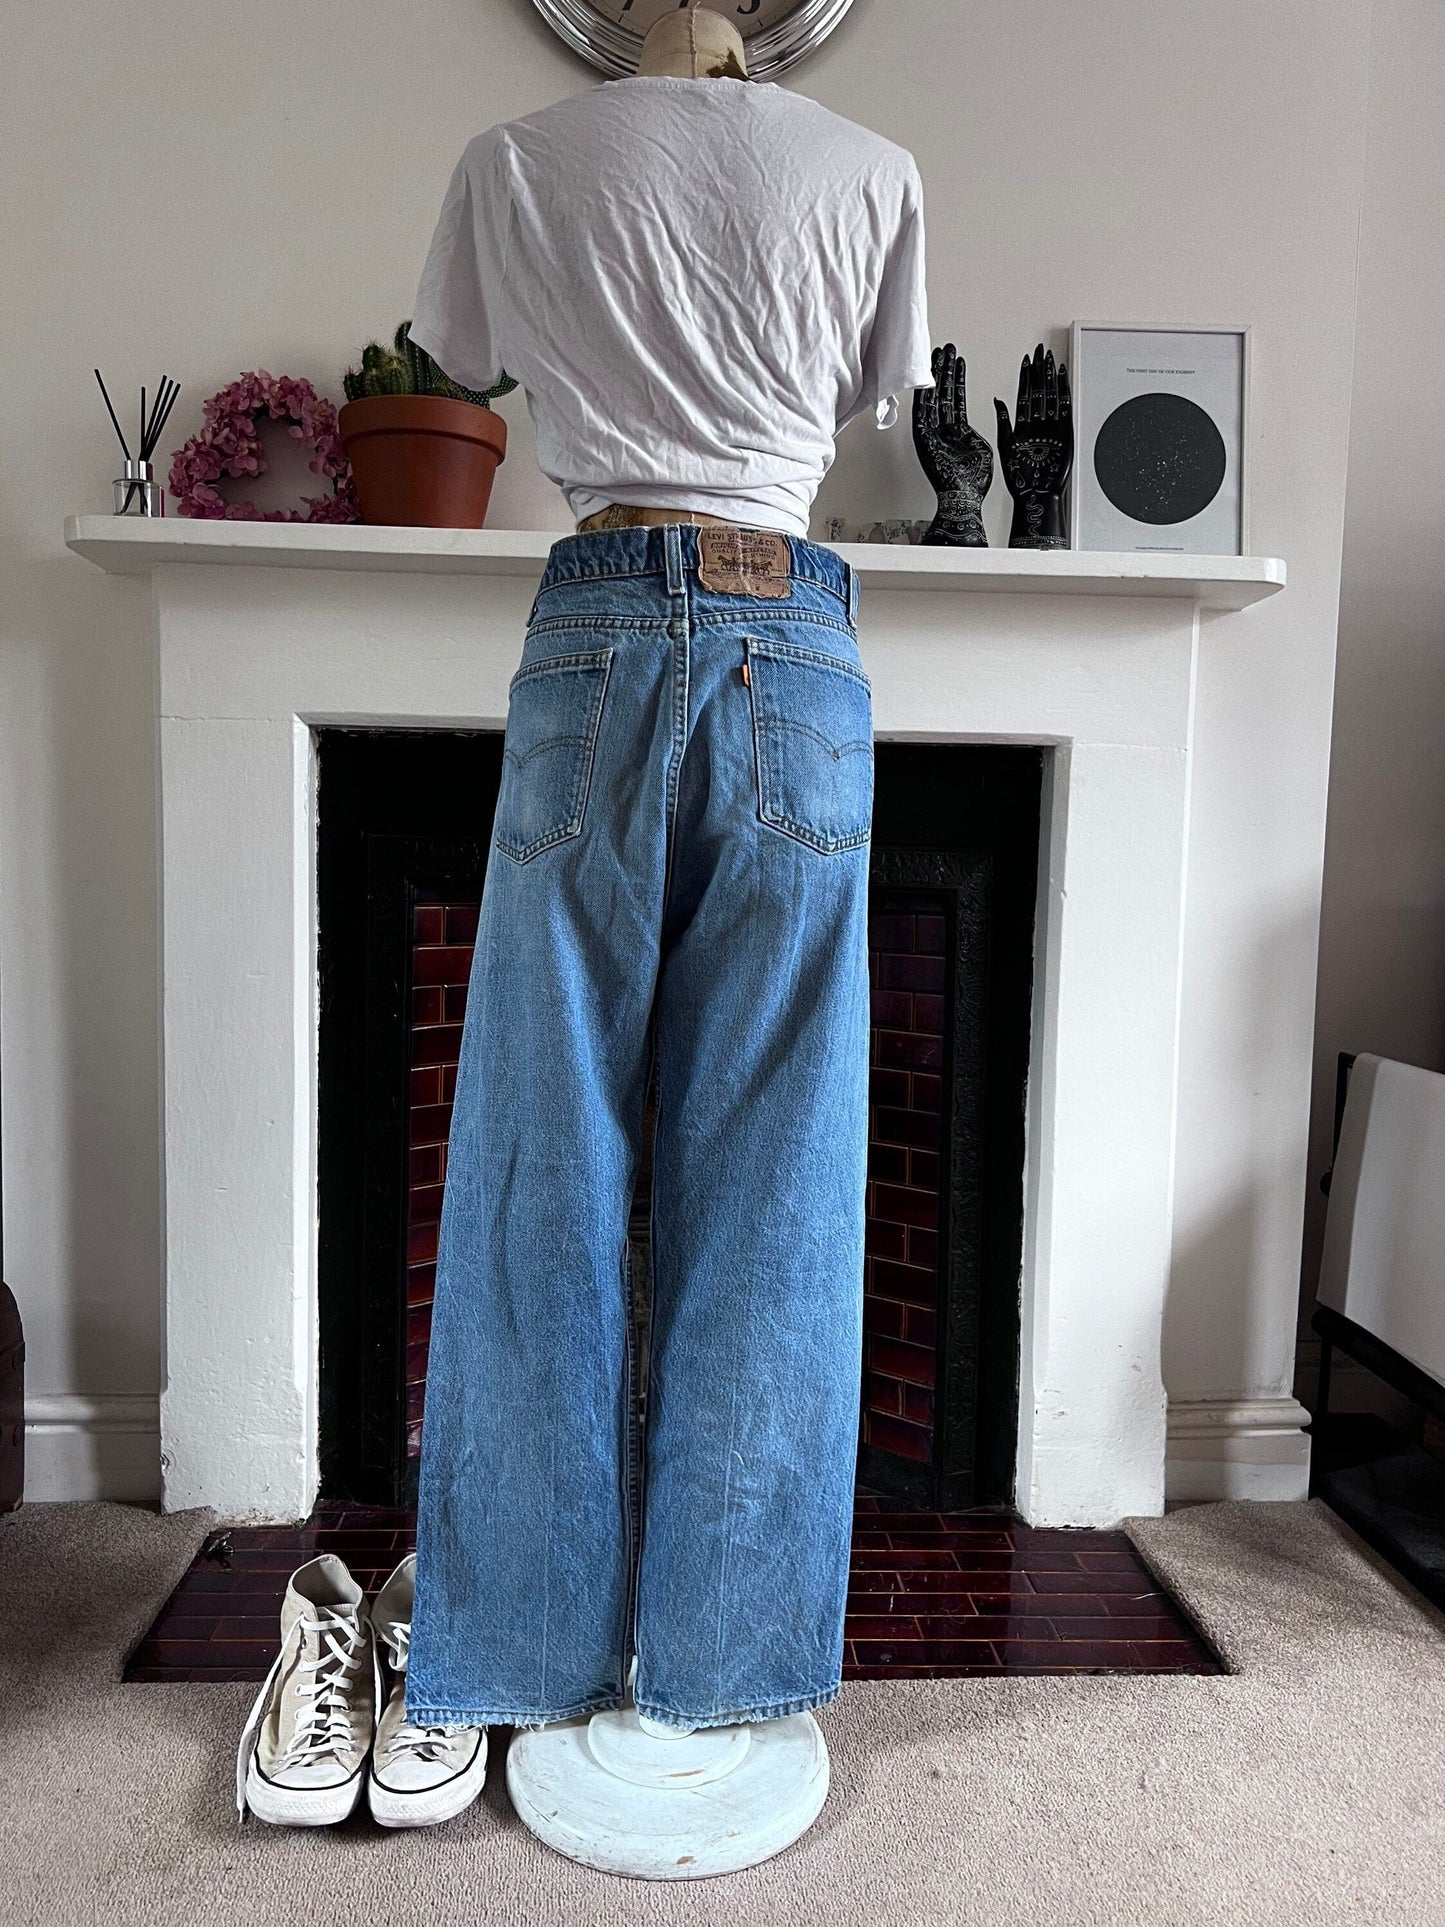 Vintage Levi Jeans Relaxed Fit - light stone wash denim jeans  - Levi Jeans 505 W 38 L30 ORANGE TAB